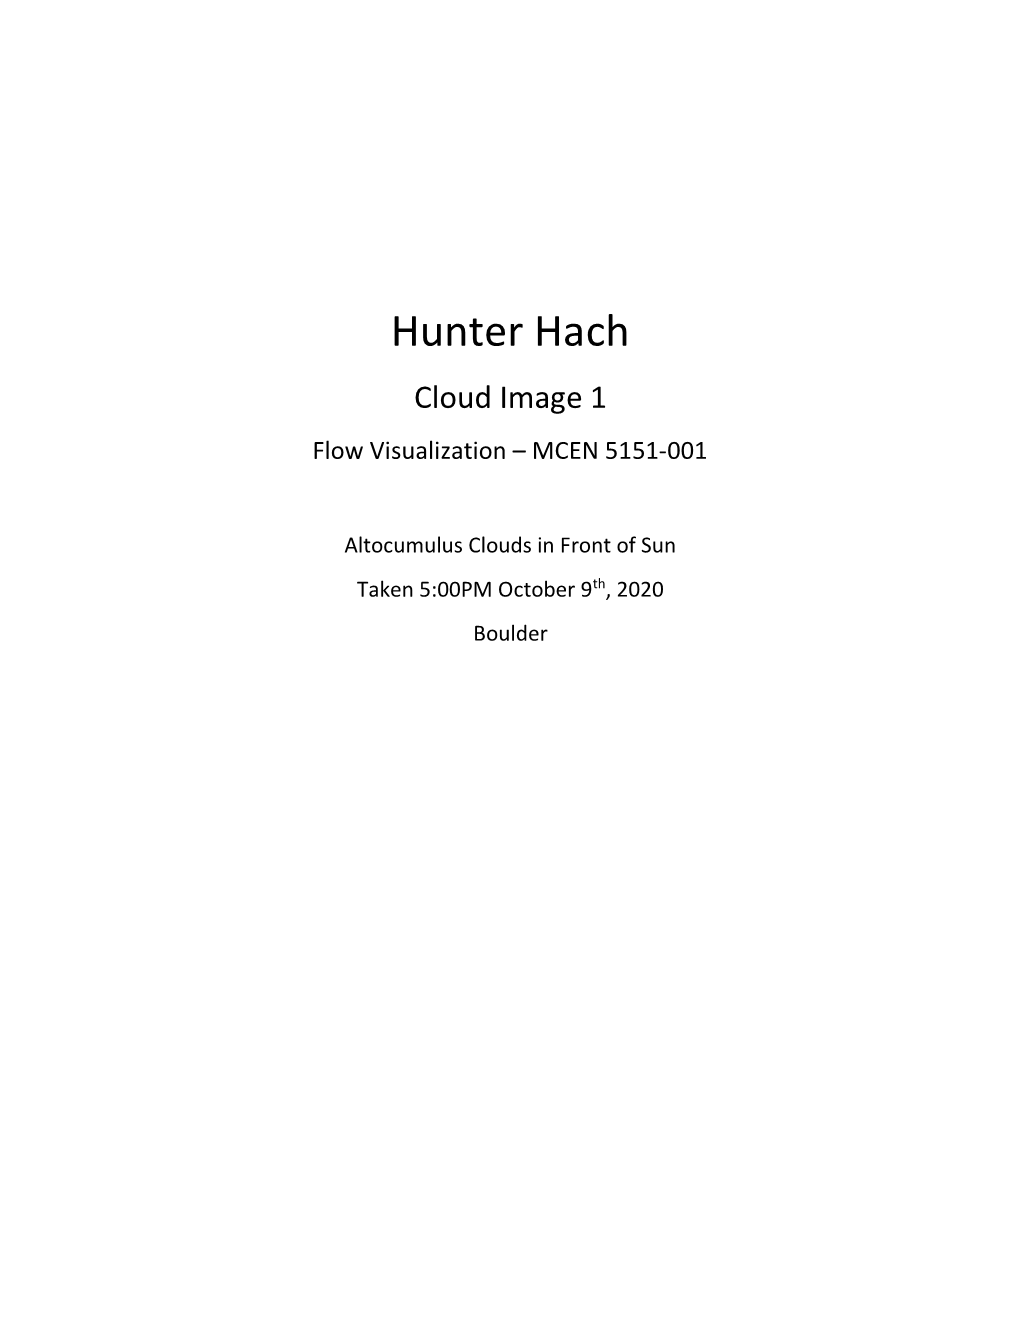 Hunter Hach Cloud Image 1 Flow Visualization – MCEN 5151-001